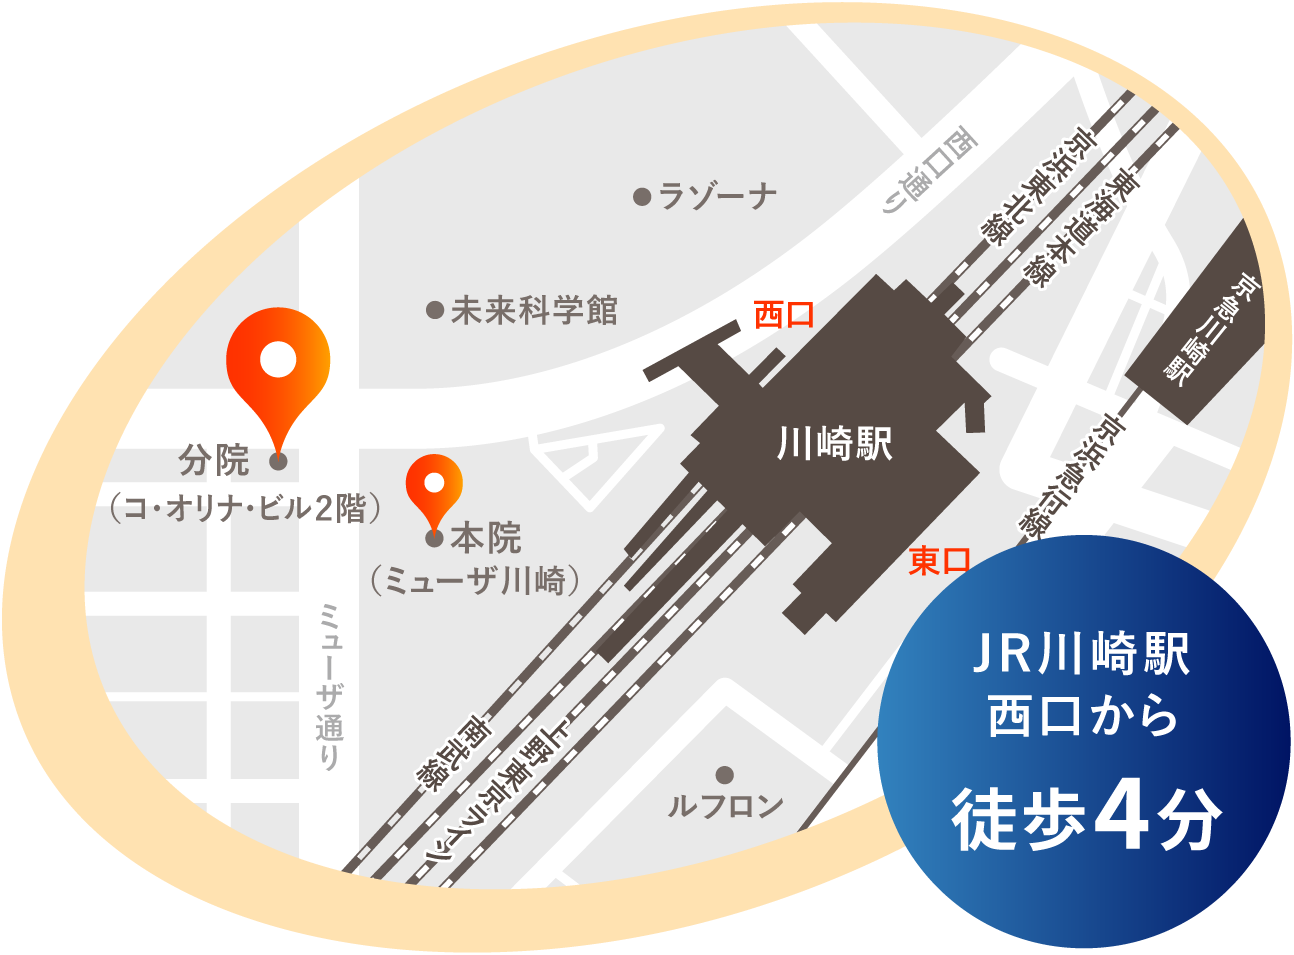 JR川崎駅西口から徒歩3分